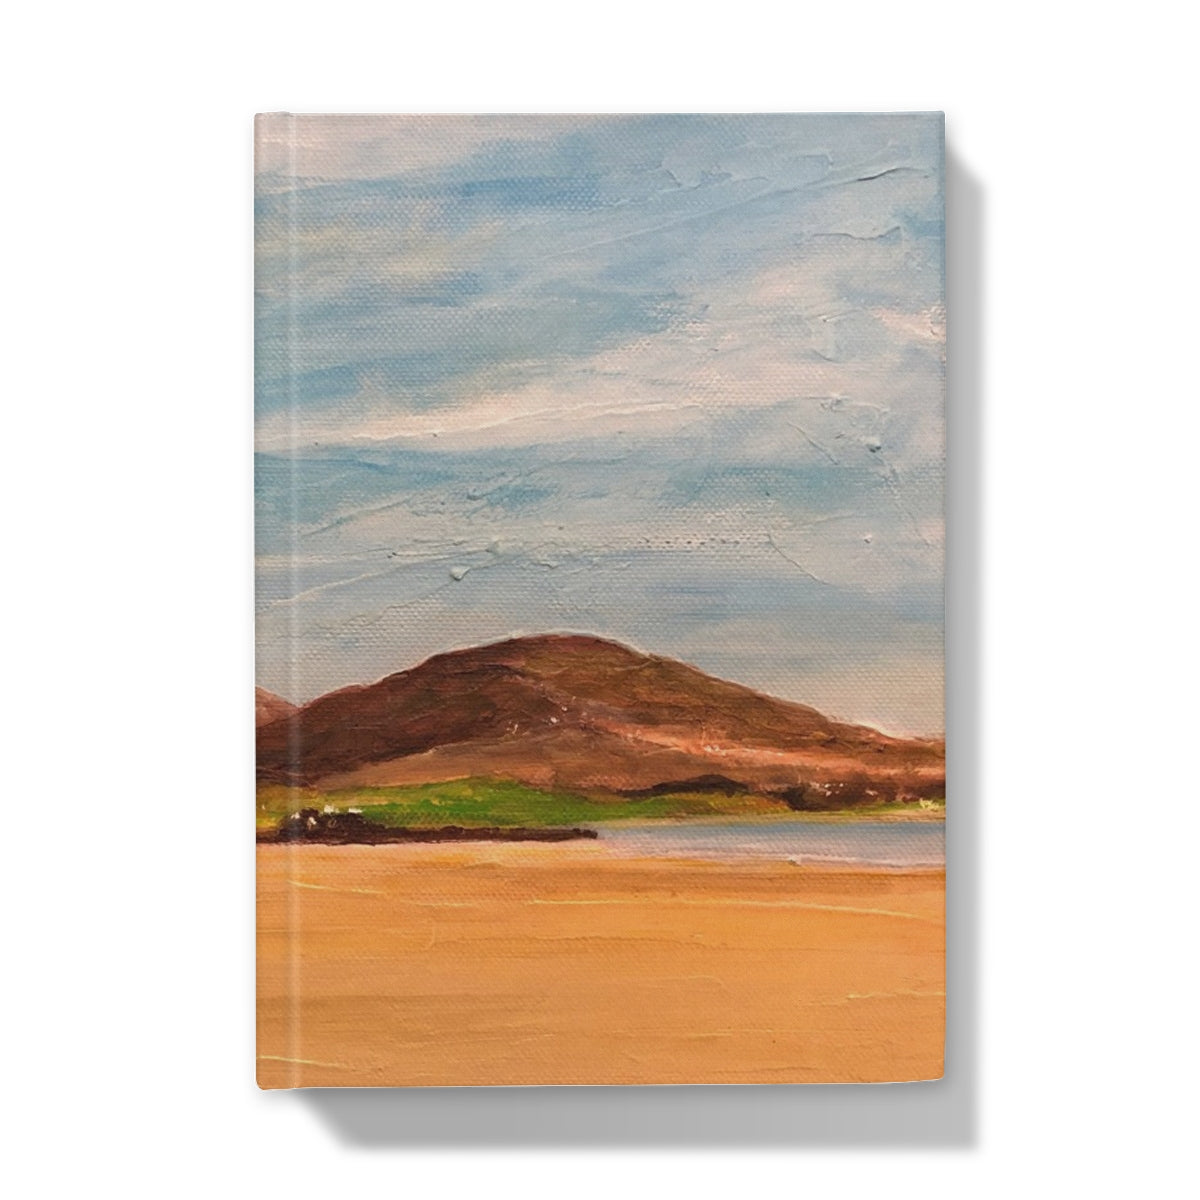 Uig Sands Lewis Art Gifts Hardback Journal-Journals & Notebooks-Hebridean Islands Art Gallery-A4-Plain-Paintings, Prints, Homeware, Art Gifts From Scotland By Scottish Artist Kevin Hunter